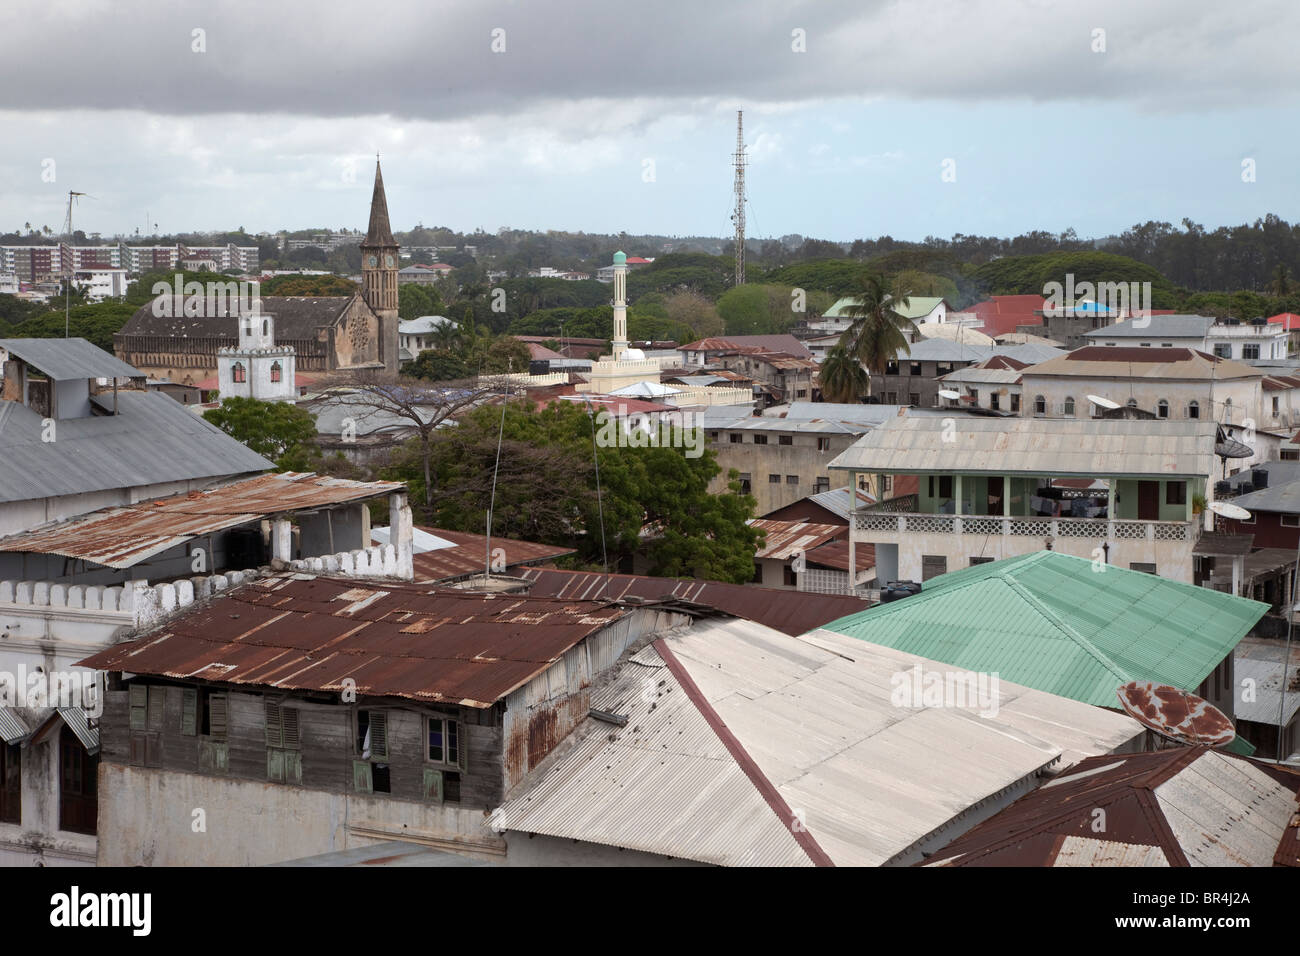 Stone Town, Zanzibar, Tanzania. Rooftops. St. Joseph's Catholic Church, Ibadhi Minaret on left, Sunni Minaret in Center. Stock Photo